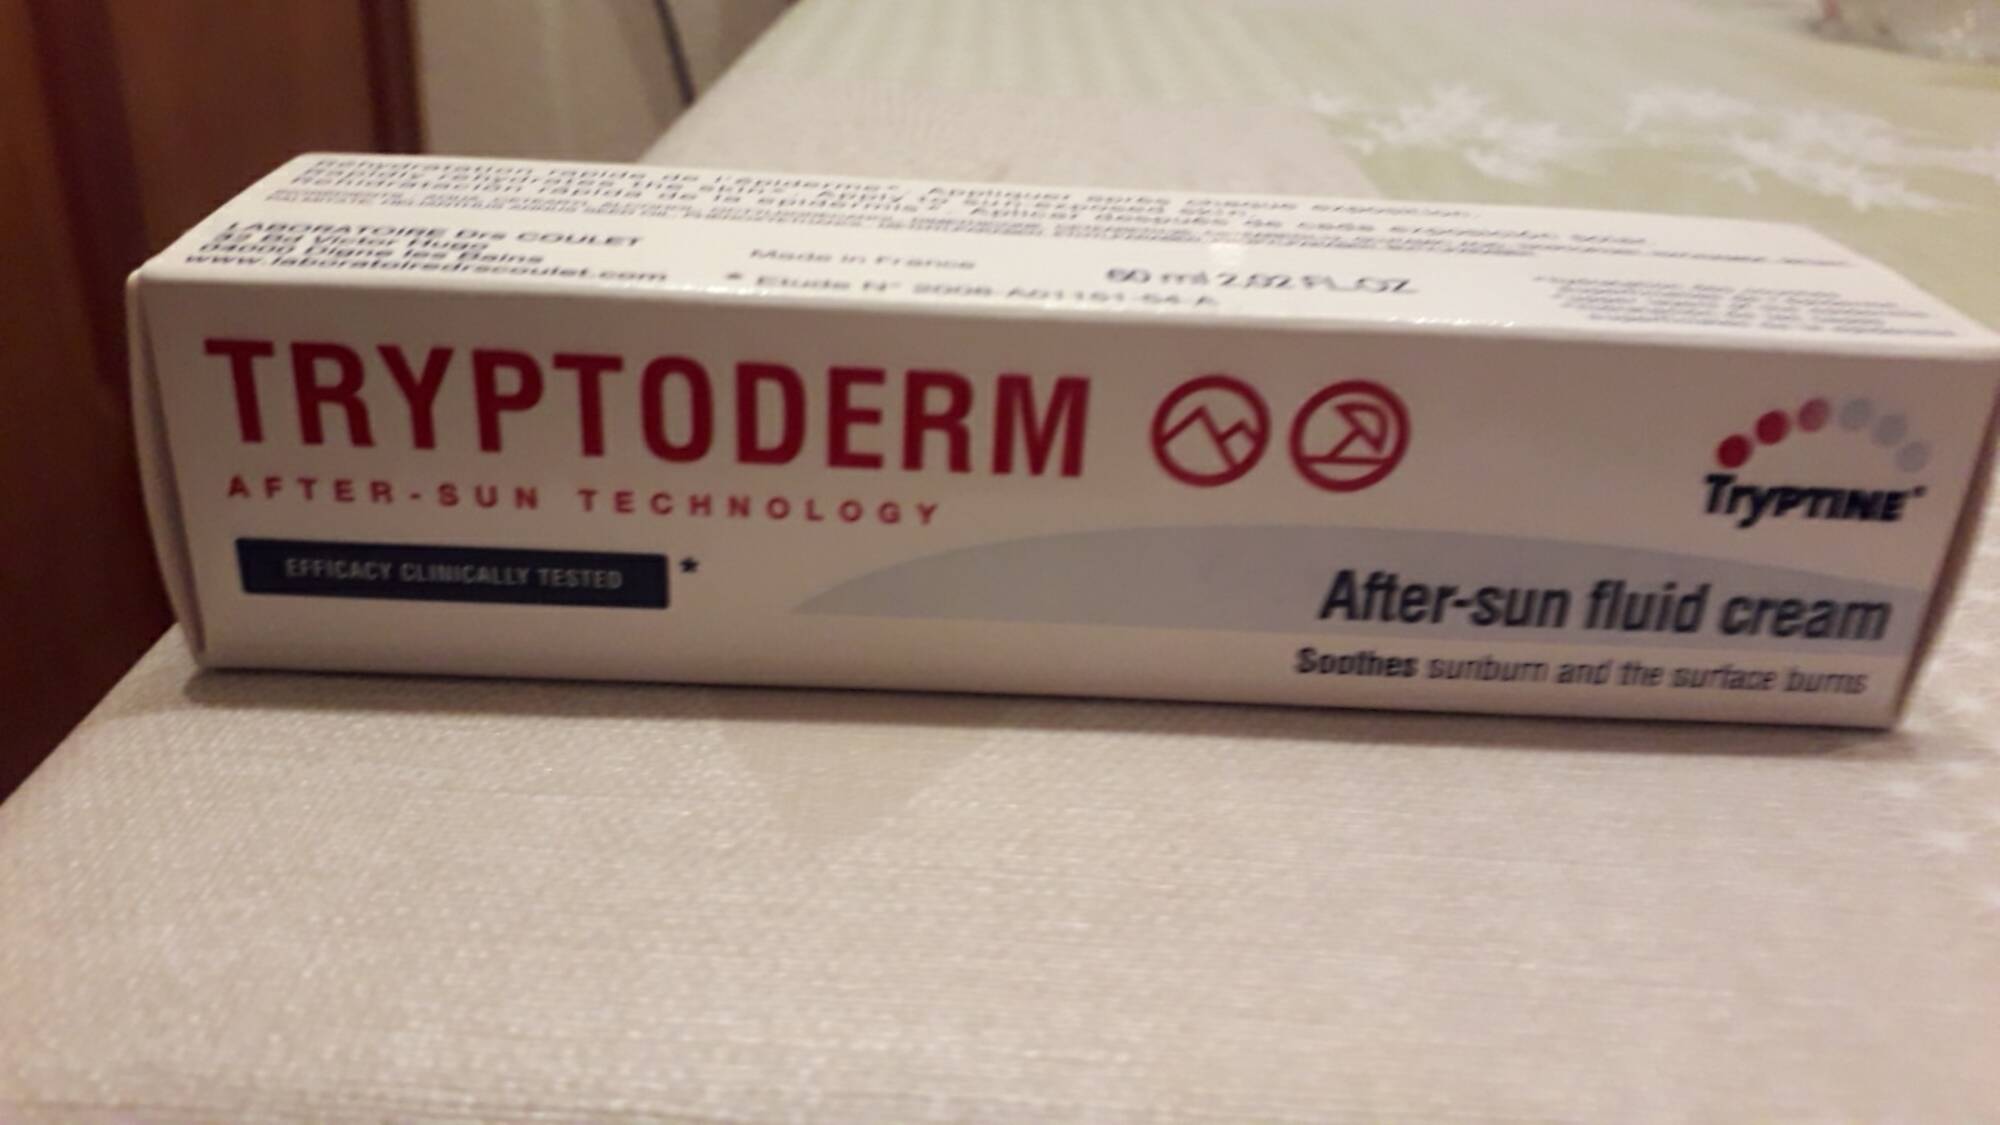 TRYPTINE - Tryptoderm - After-sun fluid cream